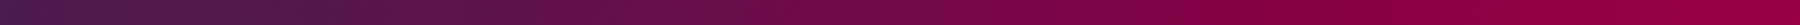 wsWEB220520-PurpleRubineColorBar2